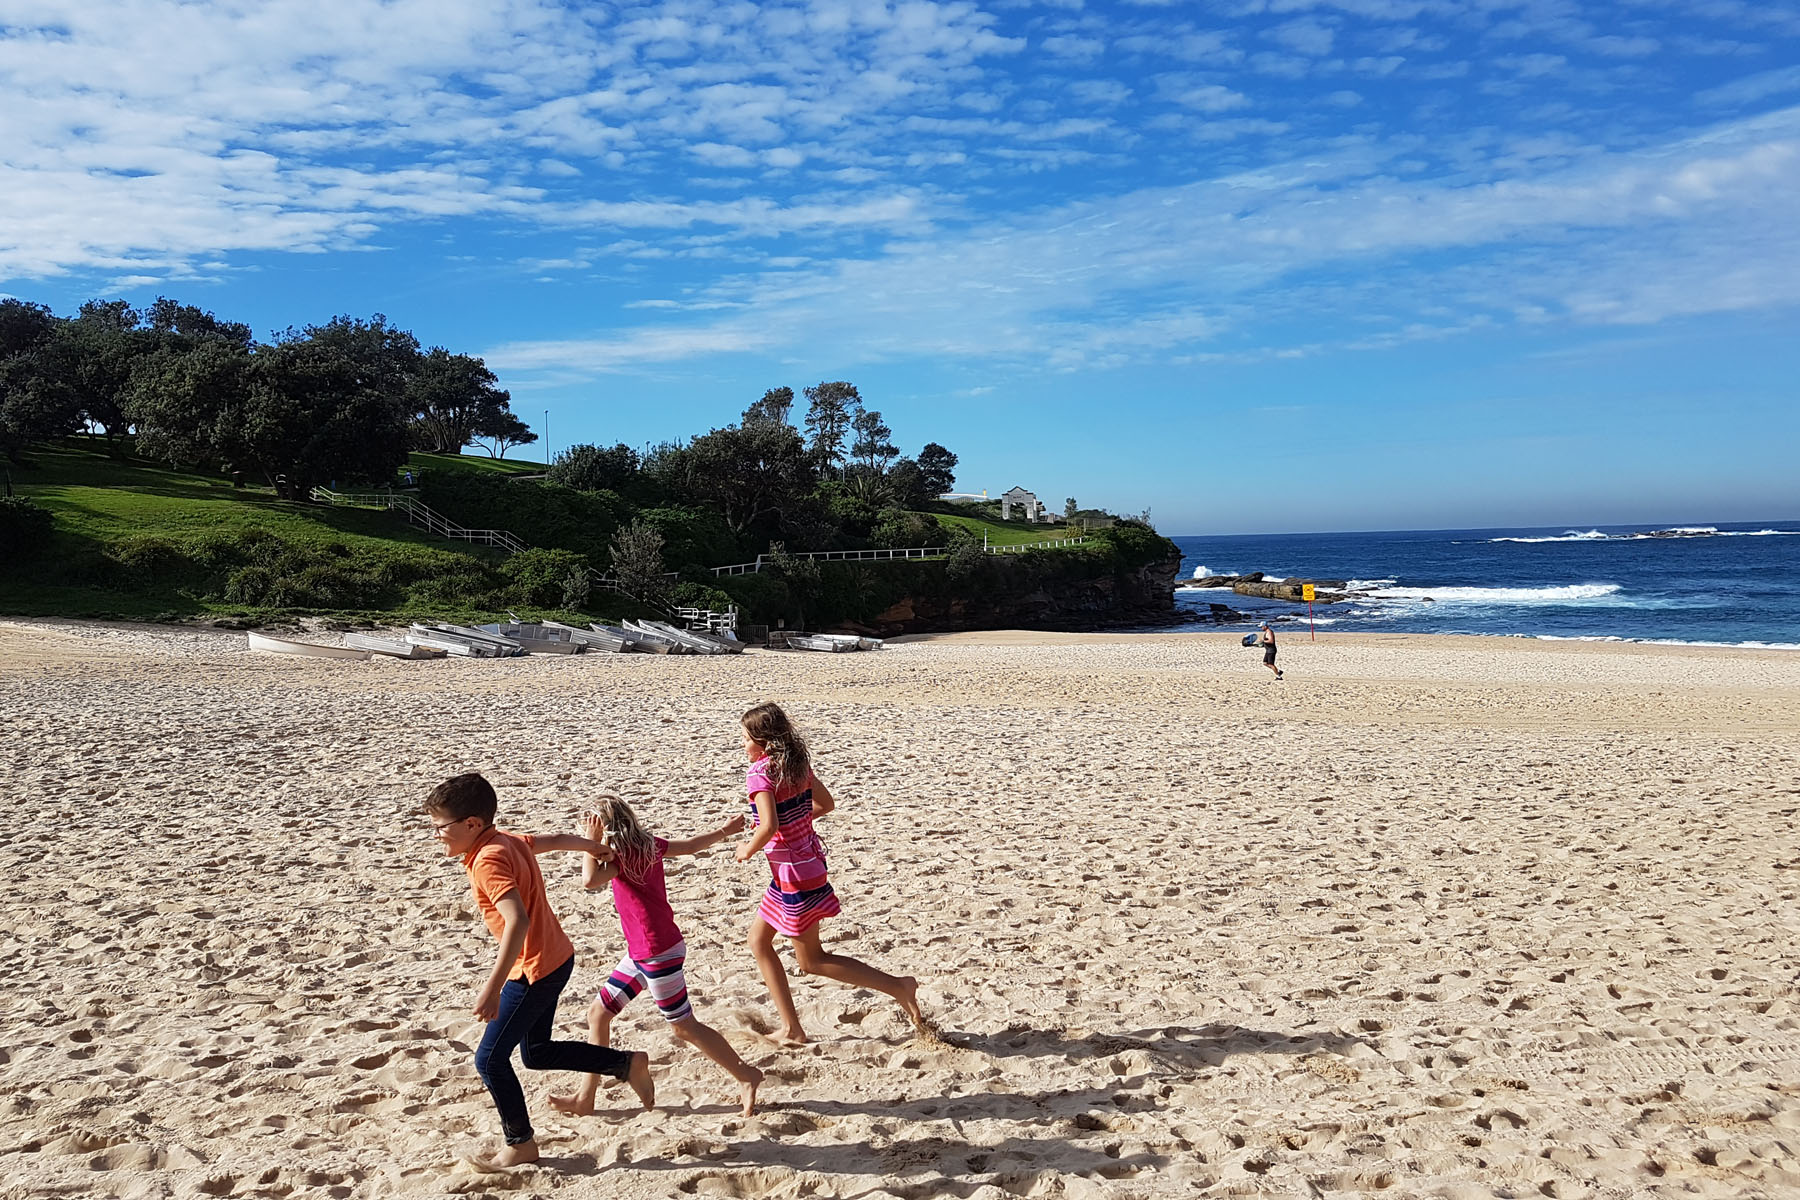 SGMT Australia Sydney_Bondi to Coogee Coastal Walk_05 Coogee Beach Children Playing